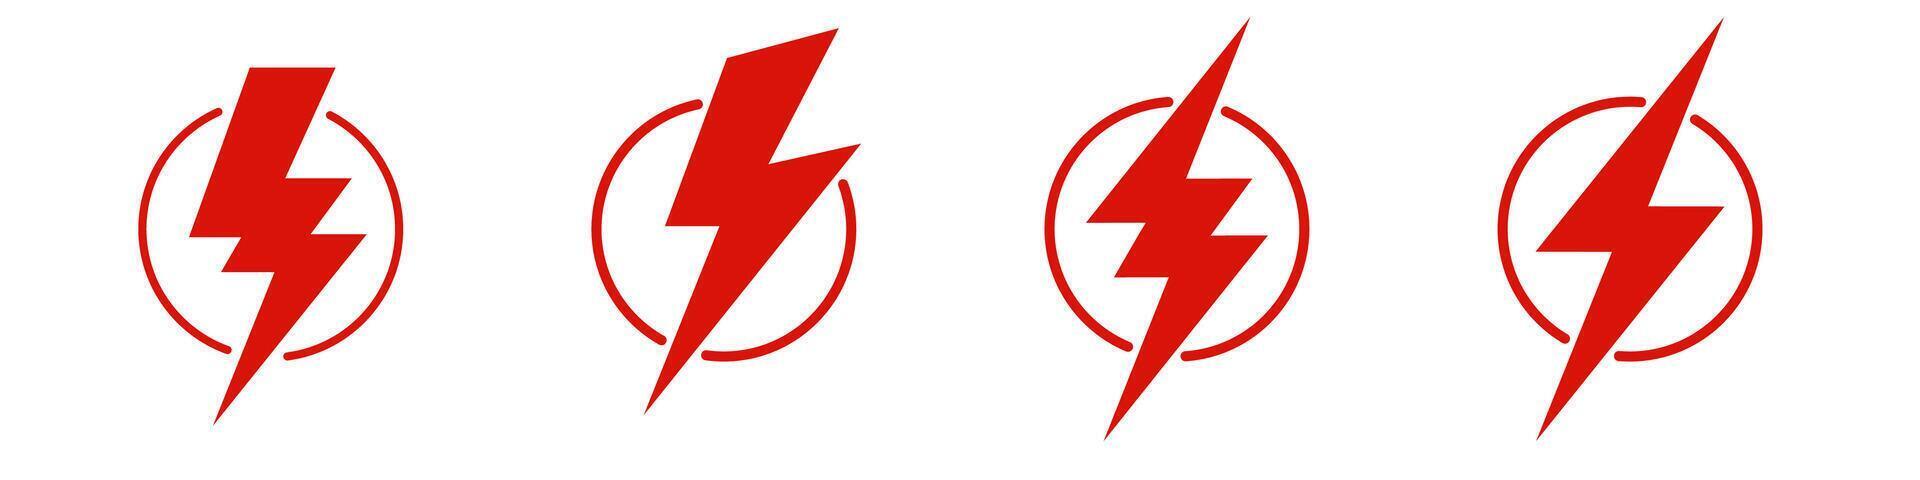 High Energy Thunder Bolt Logo Concept vector